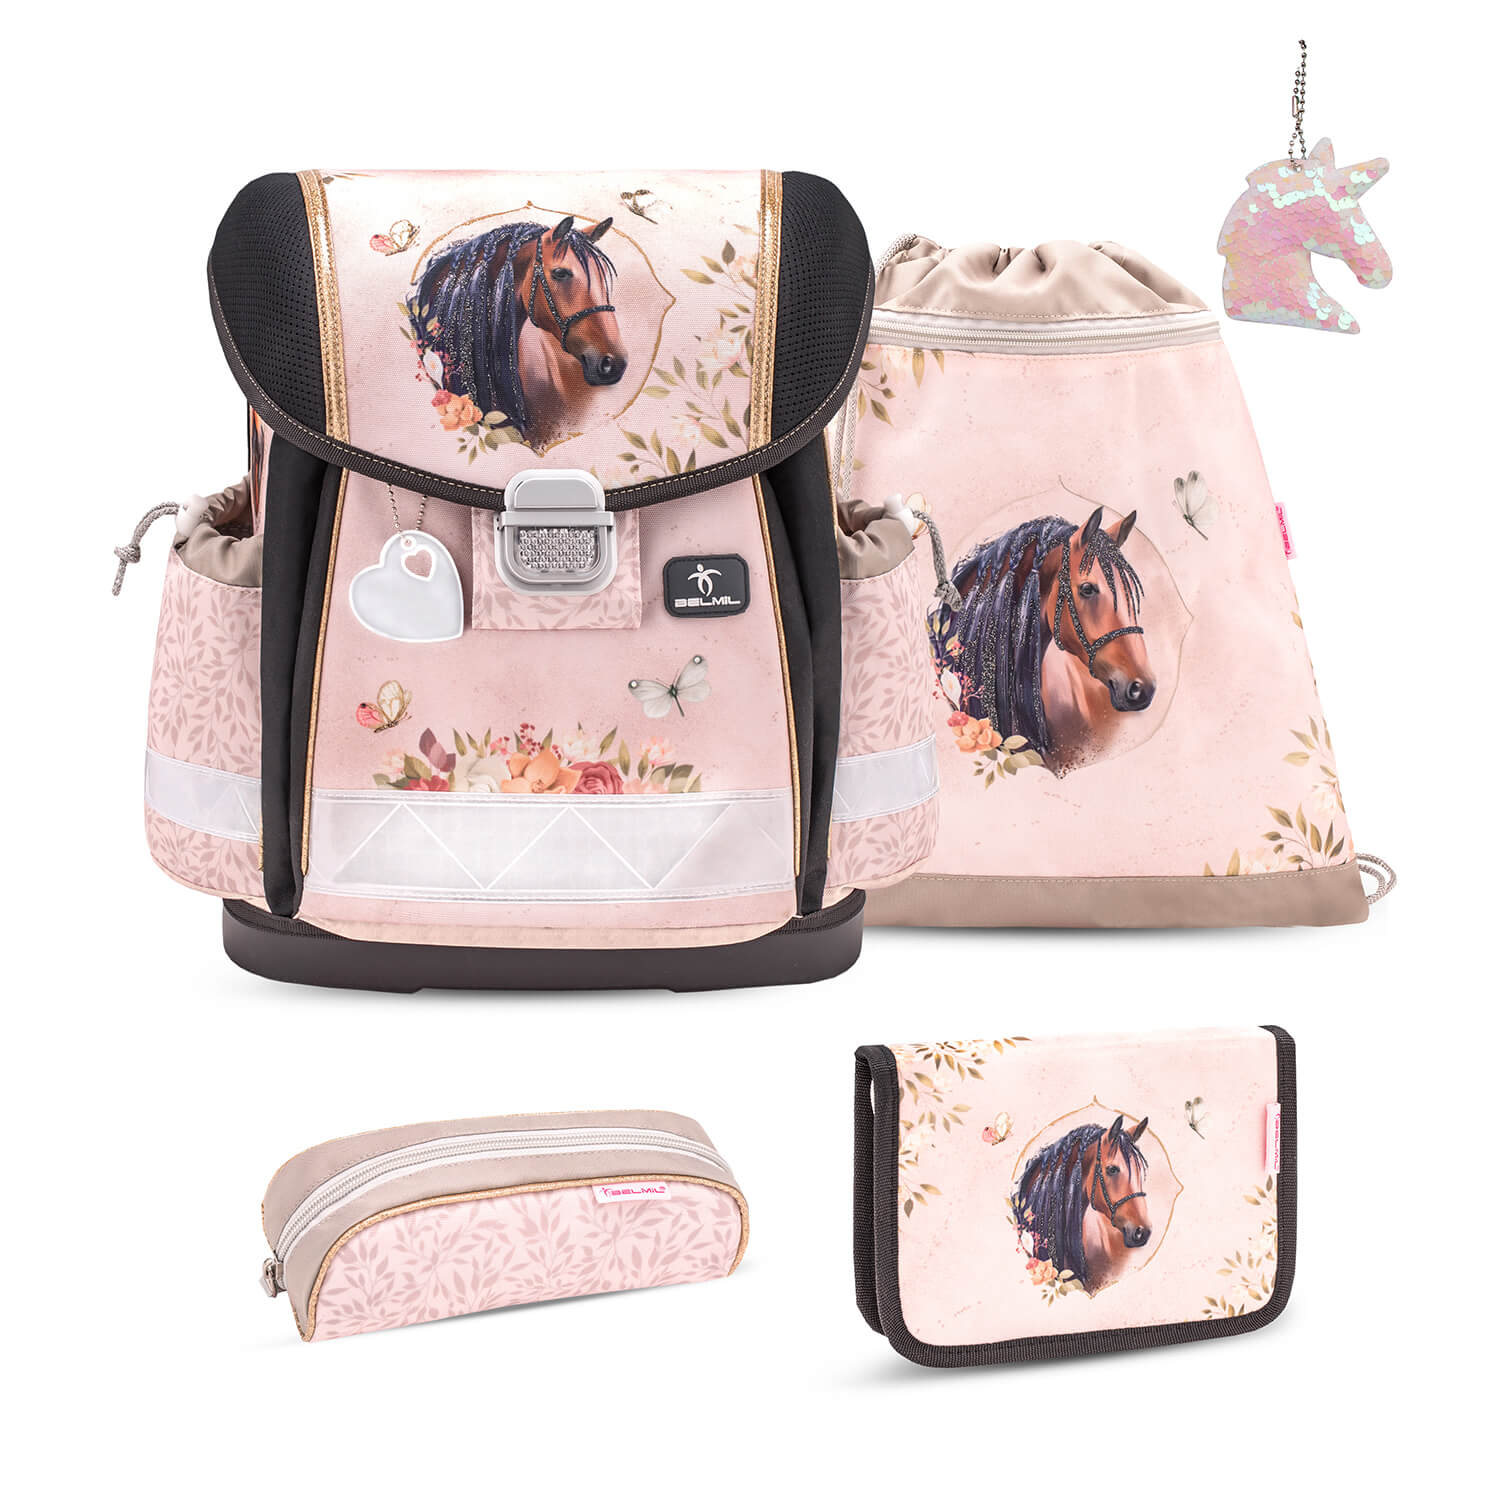 Classy Horse Chestnut schoolbag set 5 pcs with GRATIS keychain